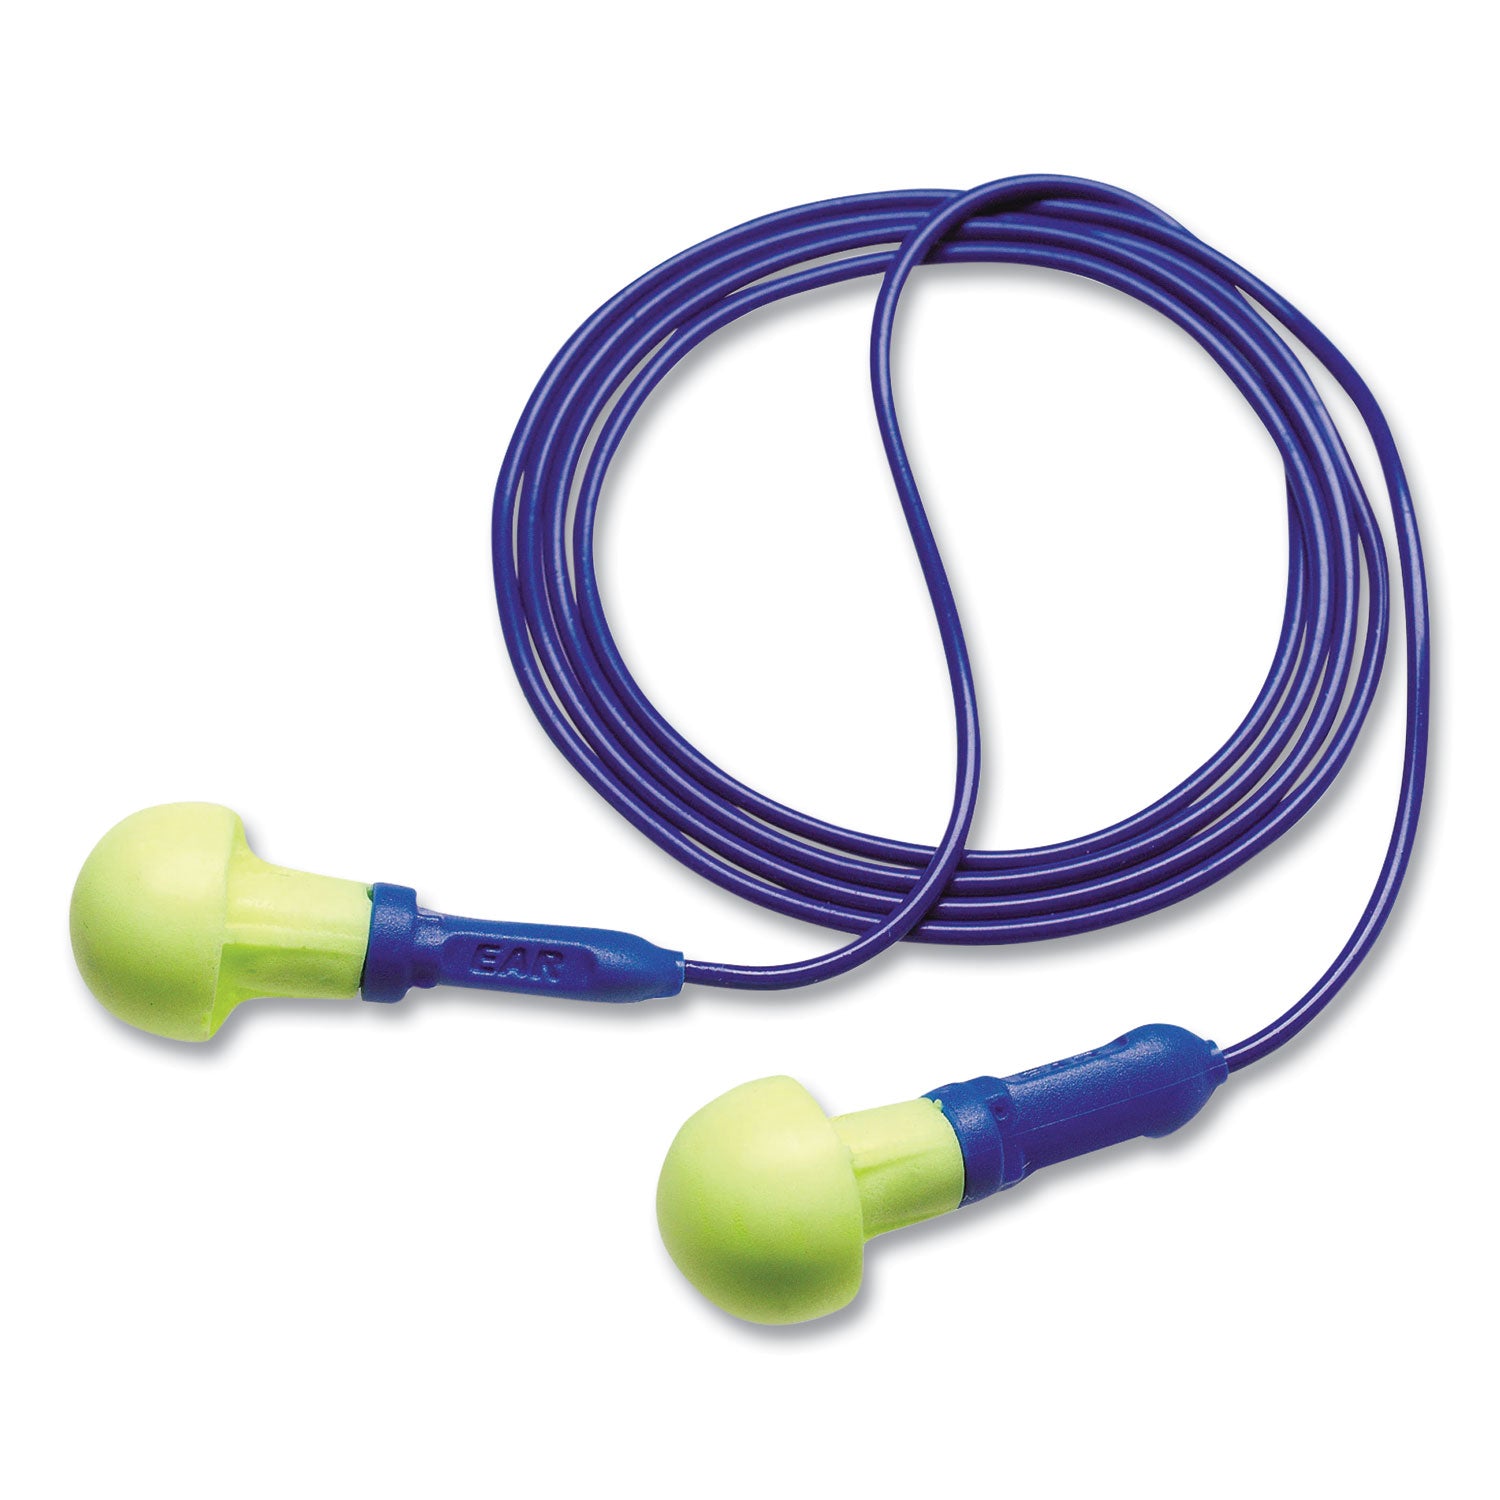 e-a-r-push-ins-single-use-earplugs-corded-28-db-nrr-blue-yellow-200-pairs_mmm3183000 - 1